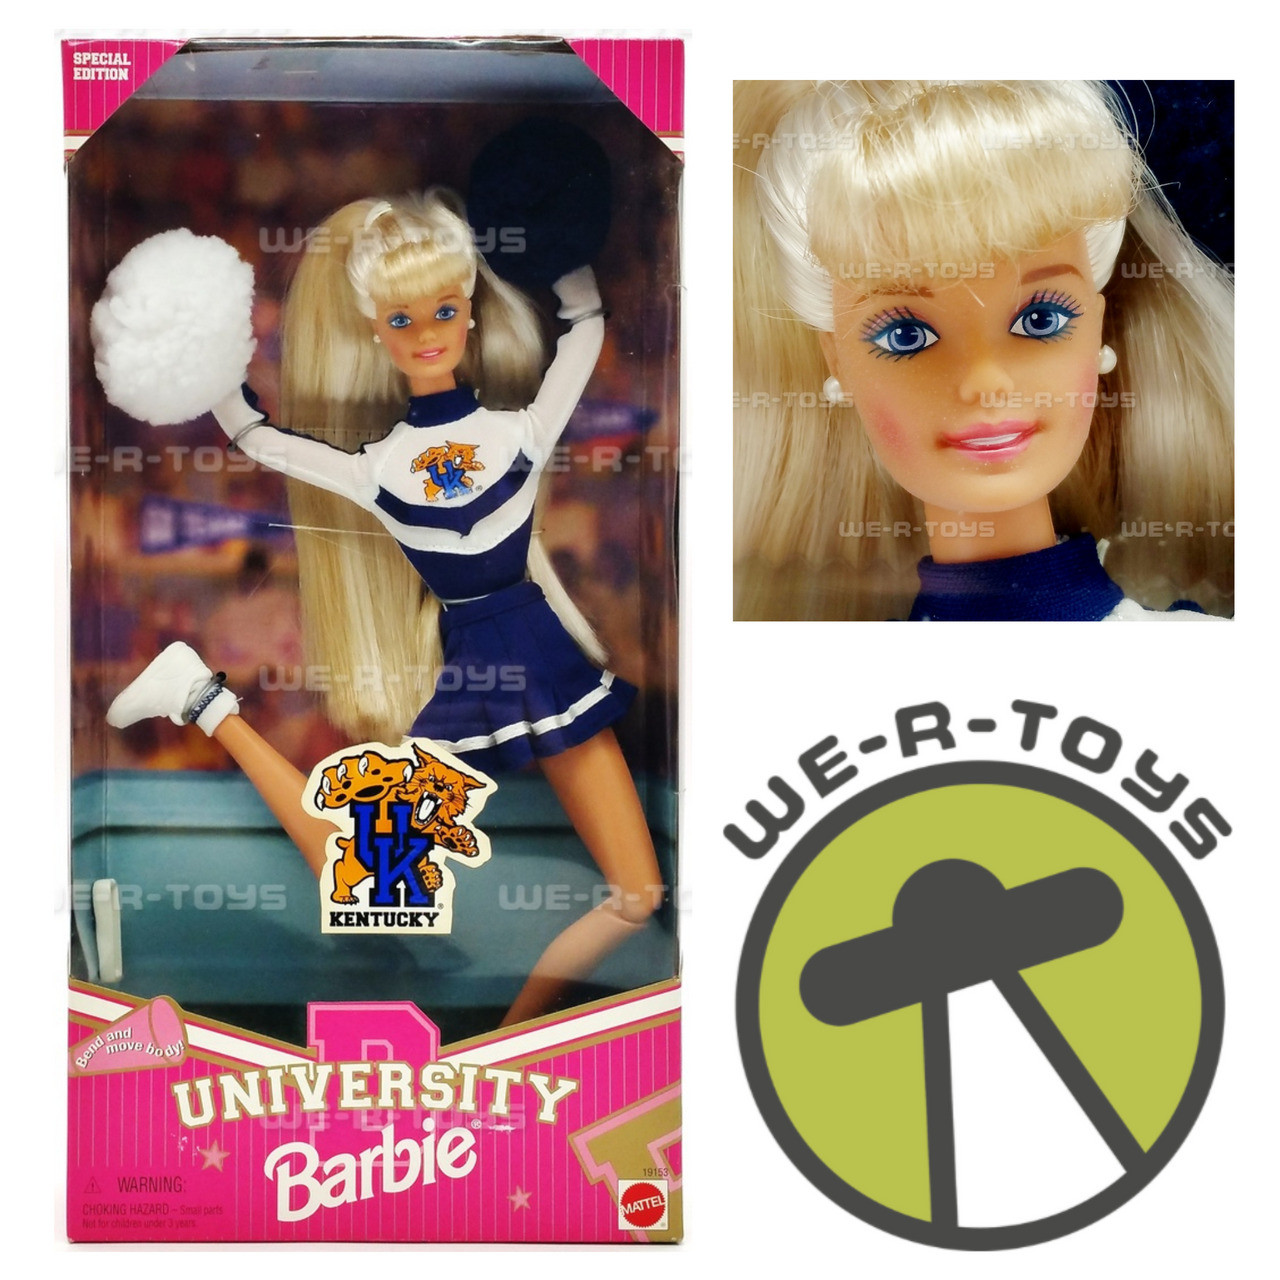 Barbie Doll University of Kentucky Cheerleader 1996 Mattel 19153